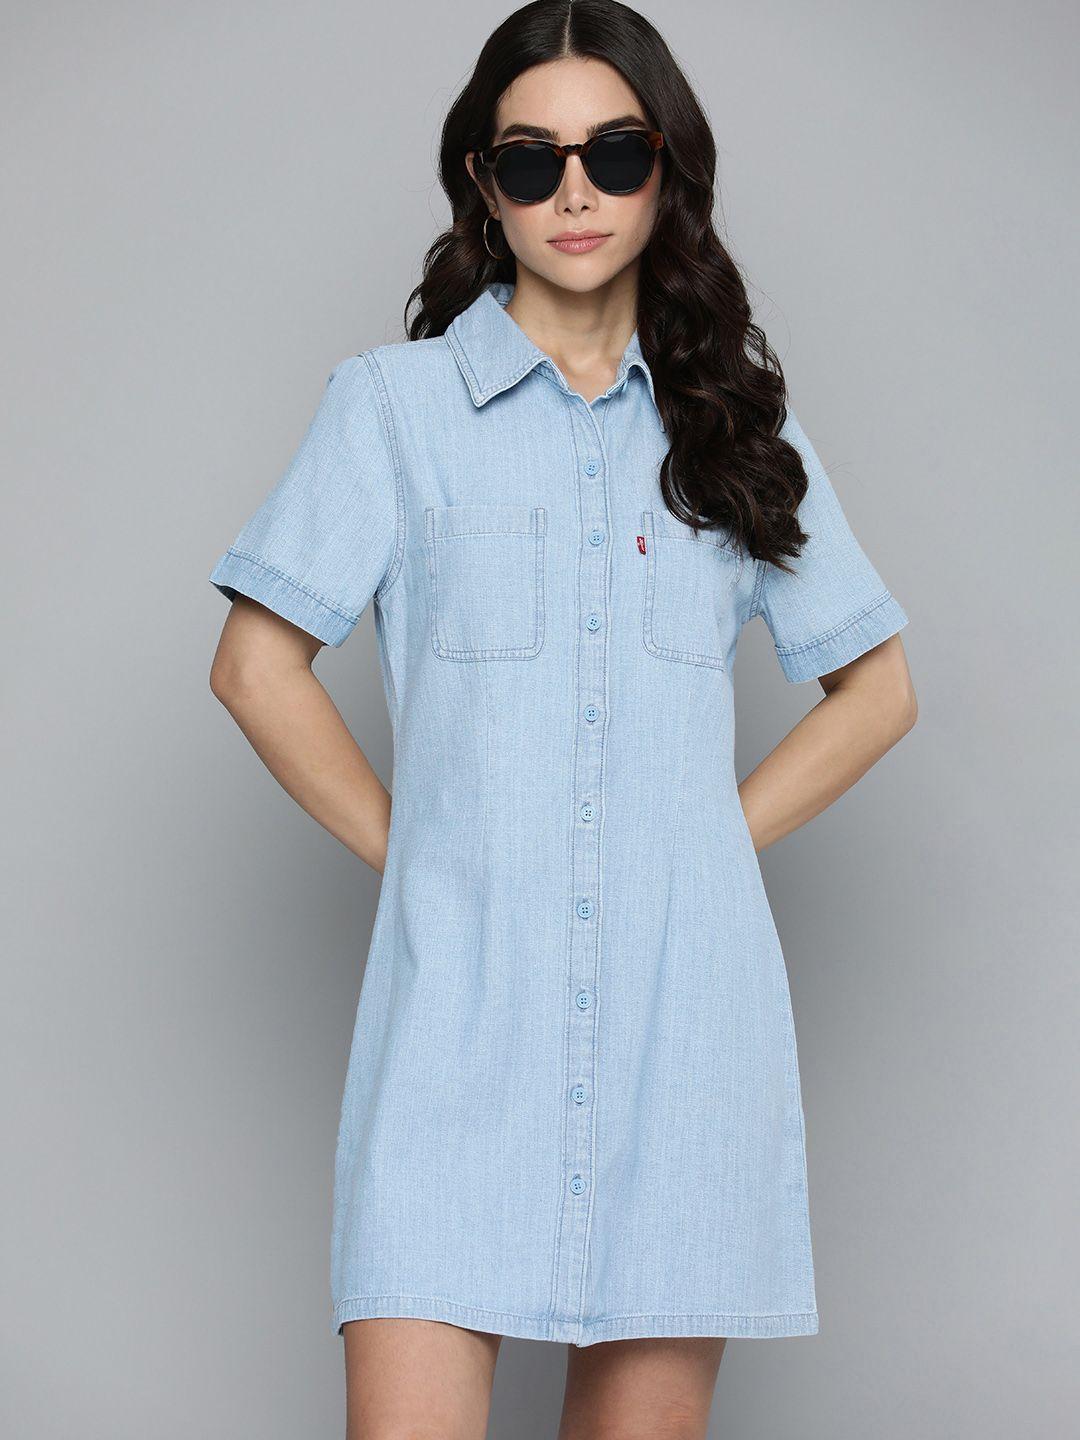 levis pure cotton chambray shirt style dress